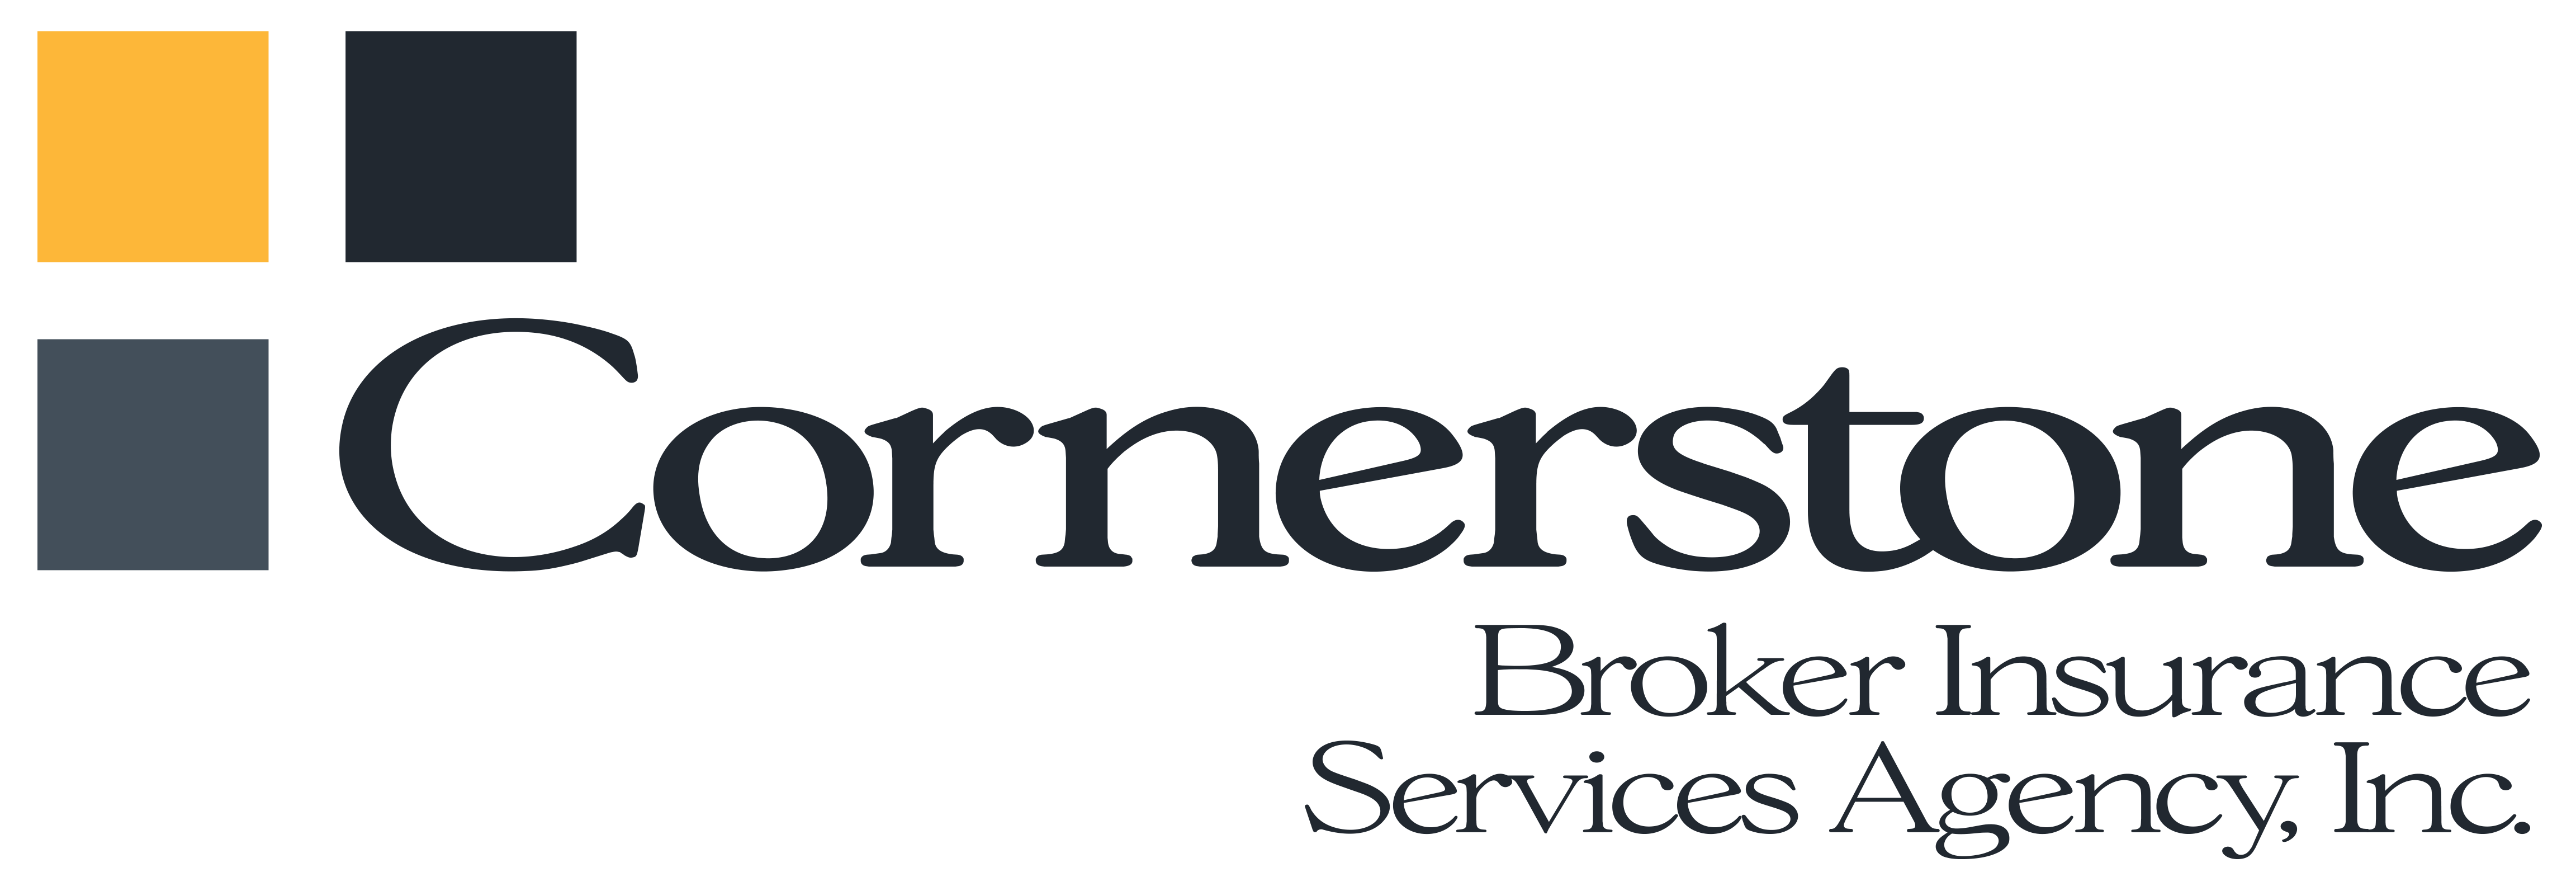 Cornerstone Broker Insurance Services Agency Profile